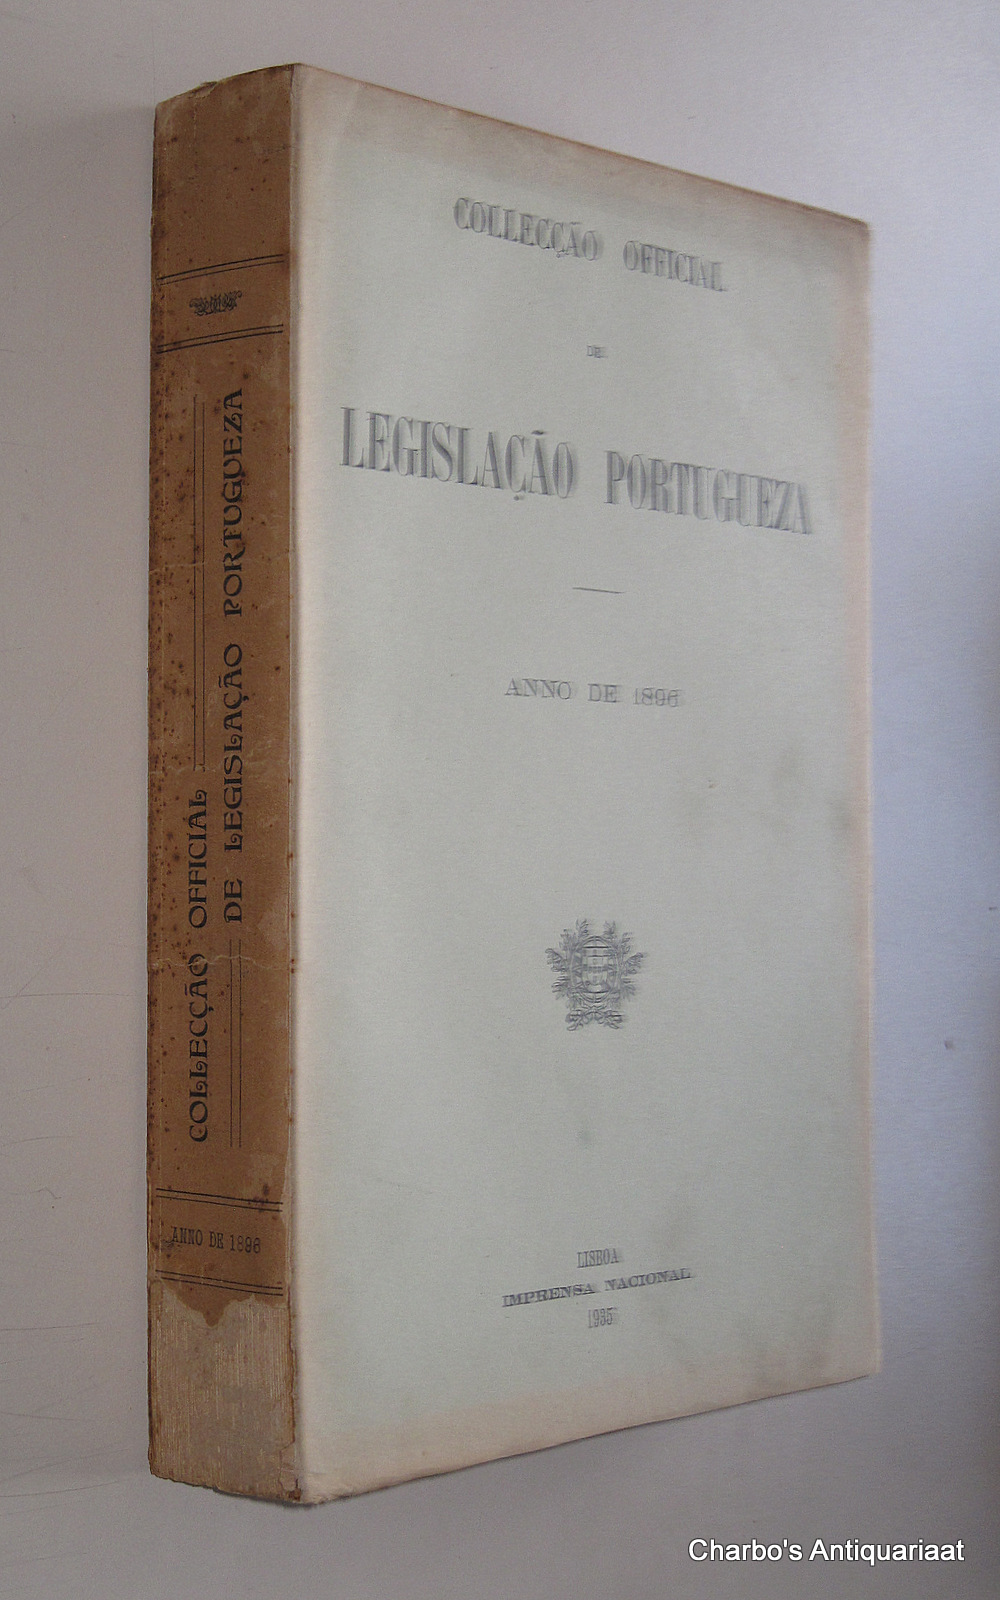 N/A, -  Colleco official de legislao portugueza, anno de 1896.